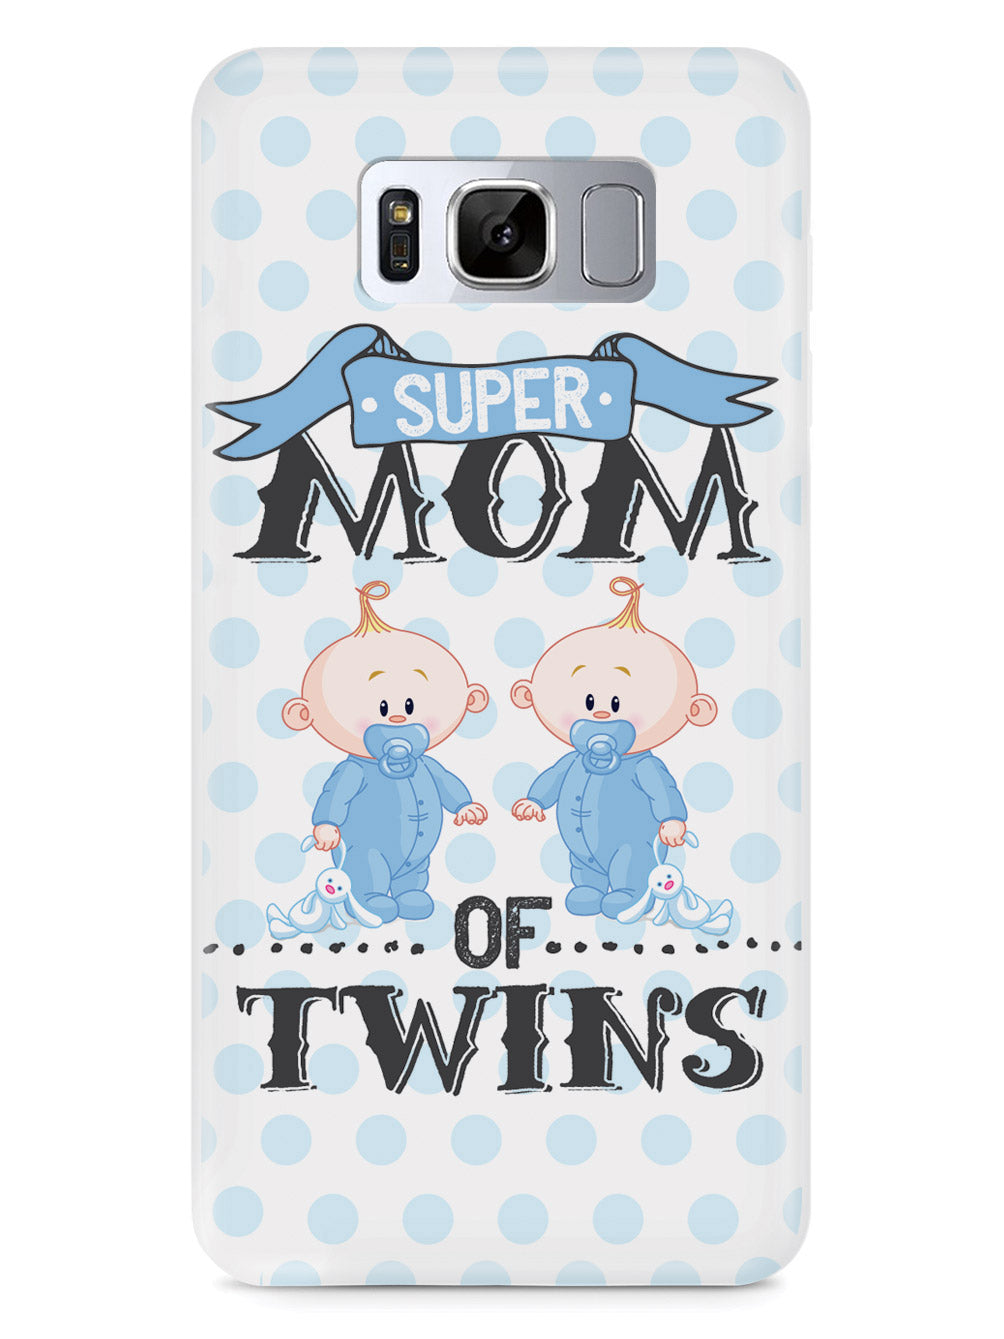 Super Mom of Twins - Boys Case